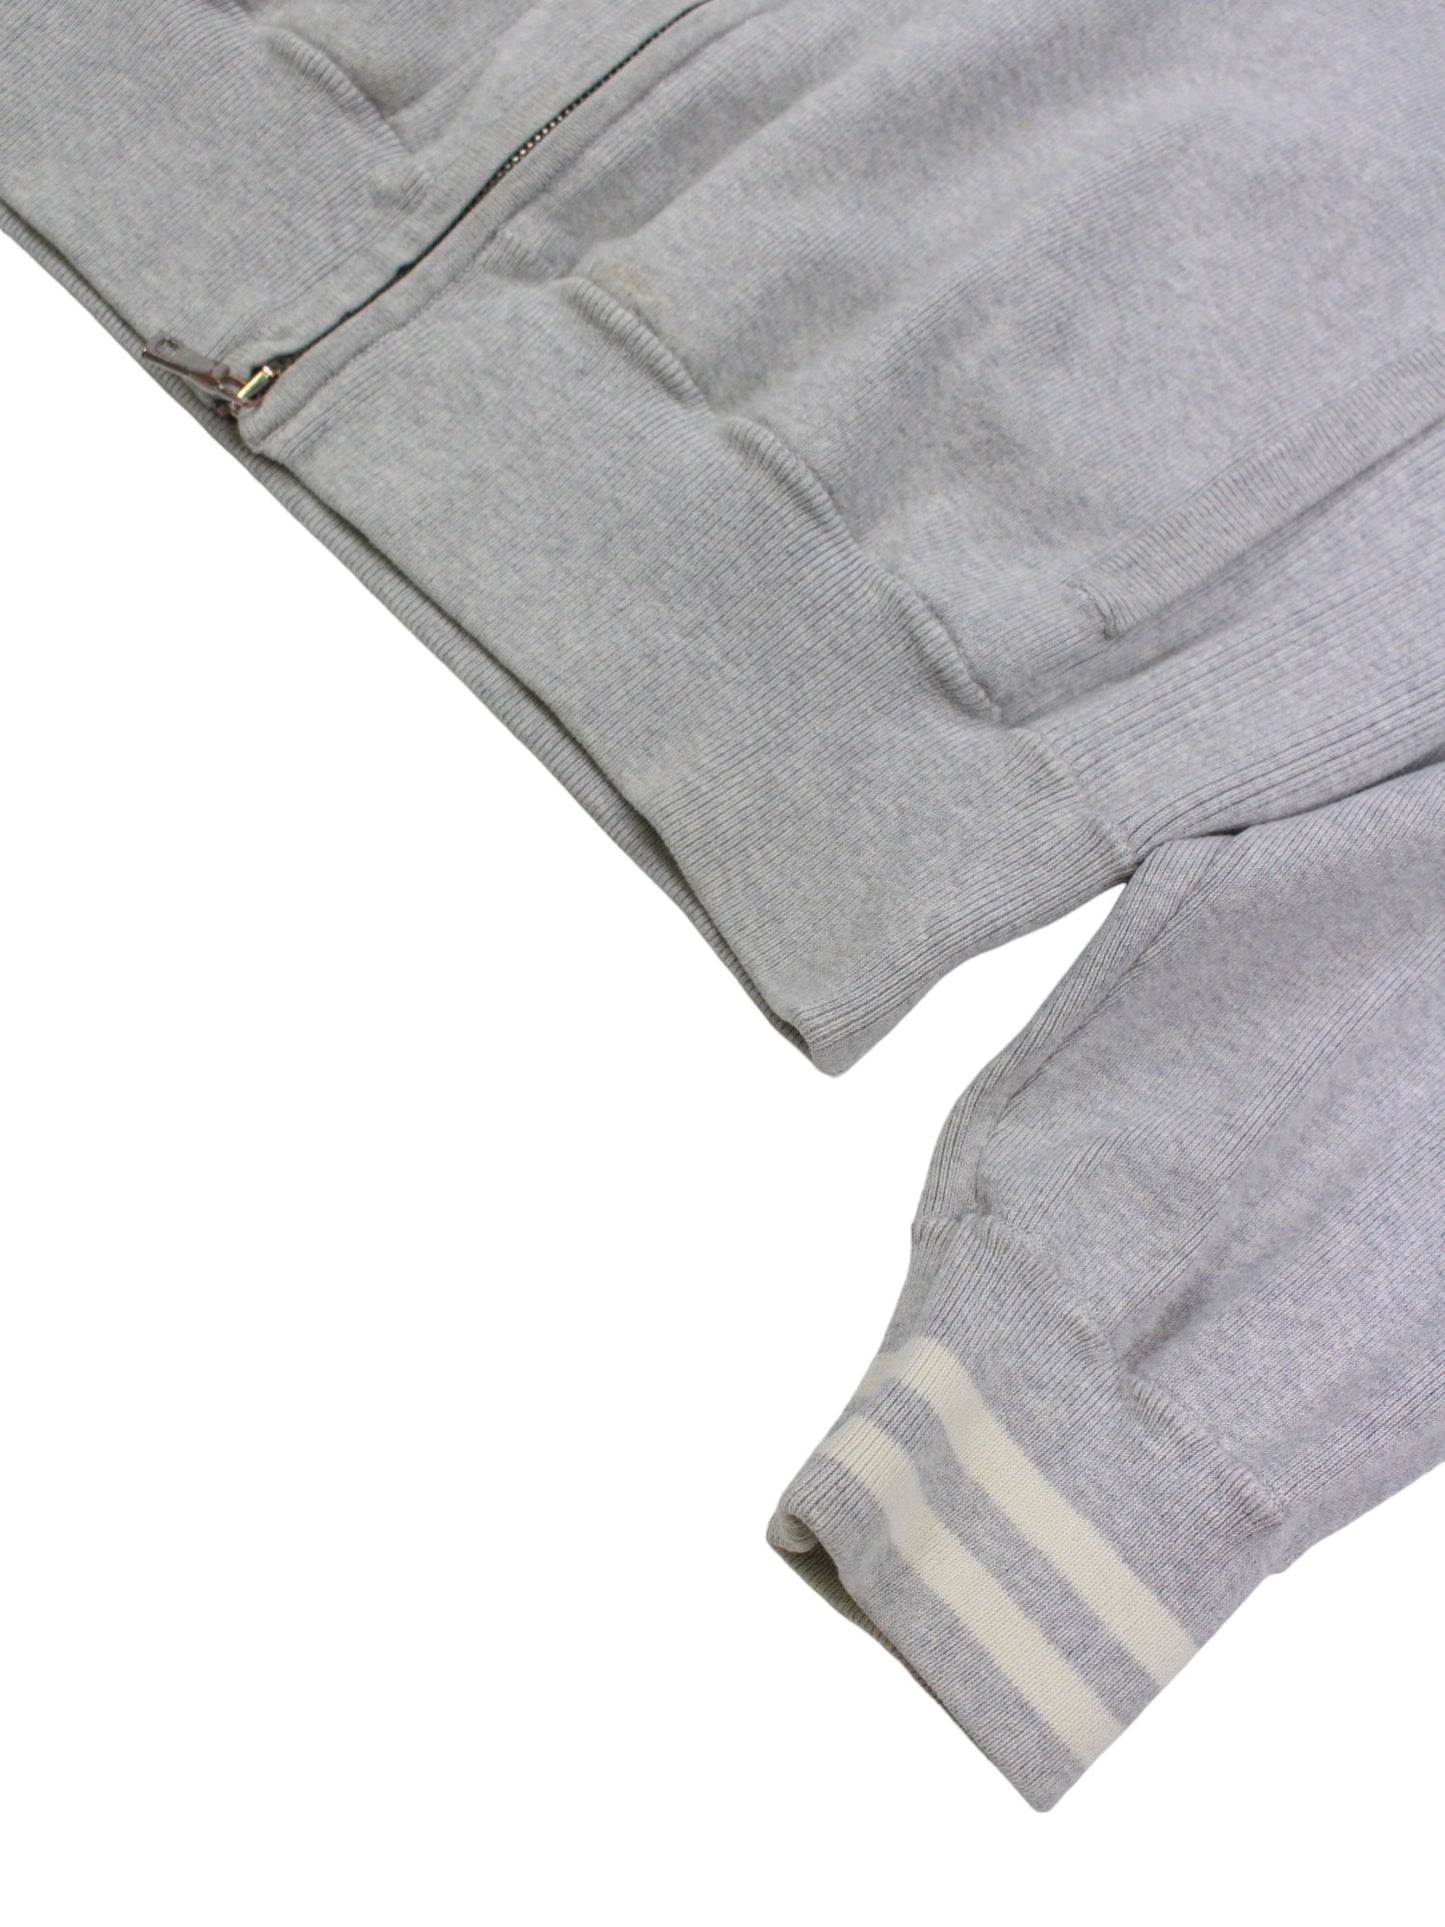 Polo Ralph Lauren Grey Cotton Jacket (M)